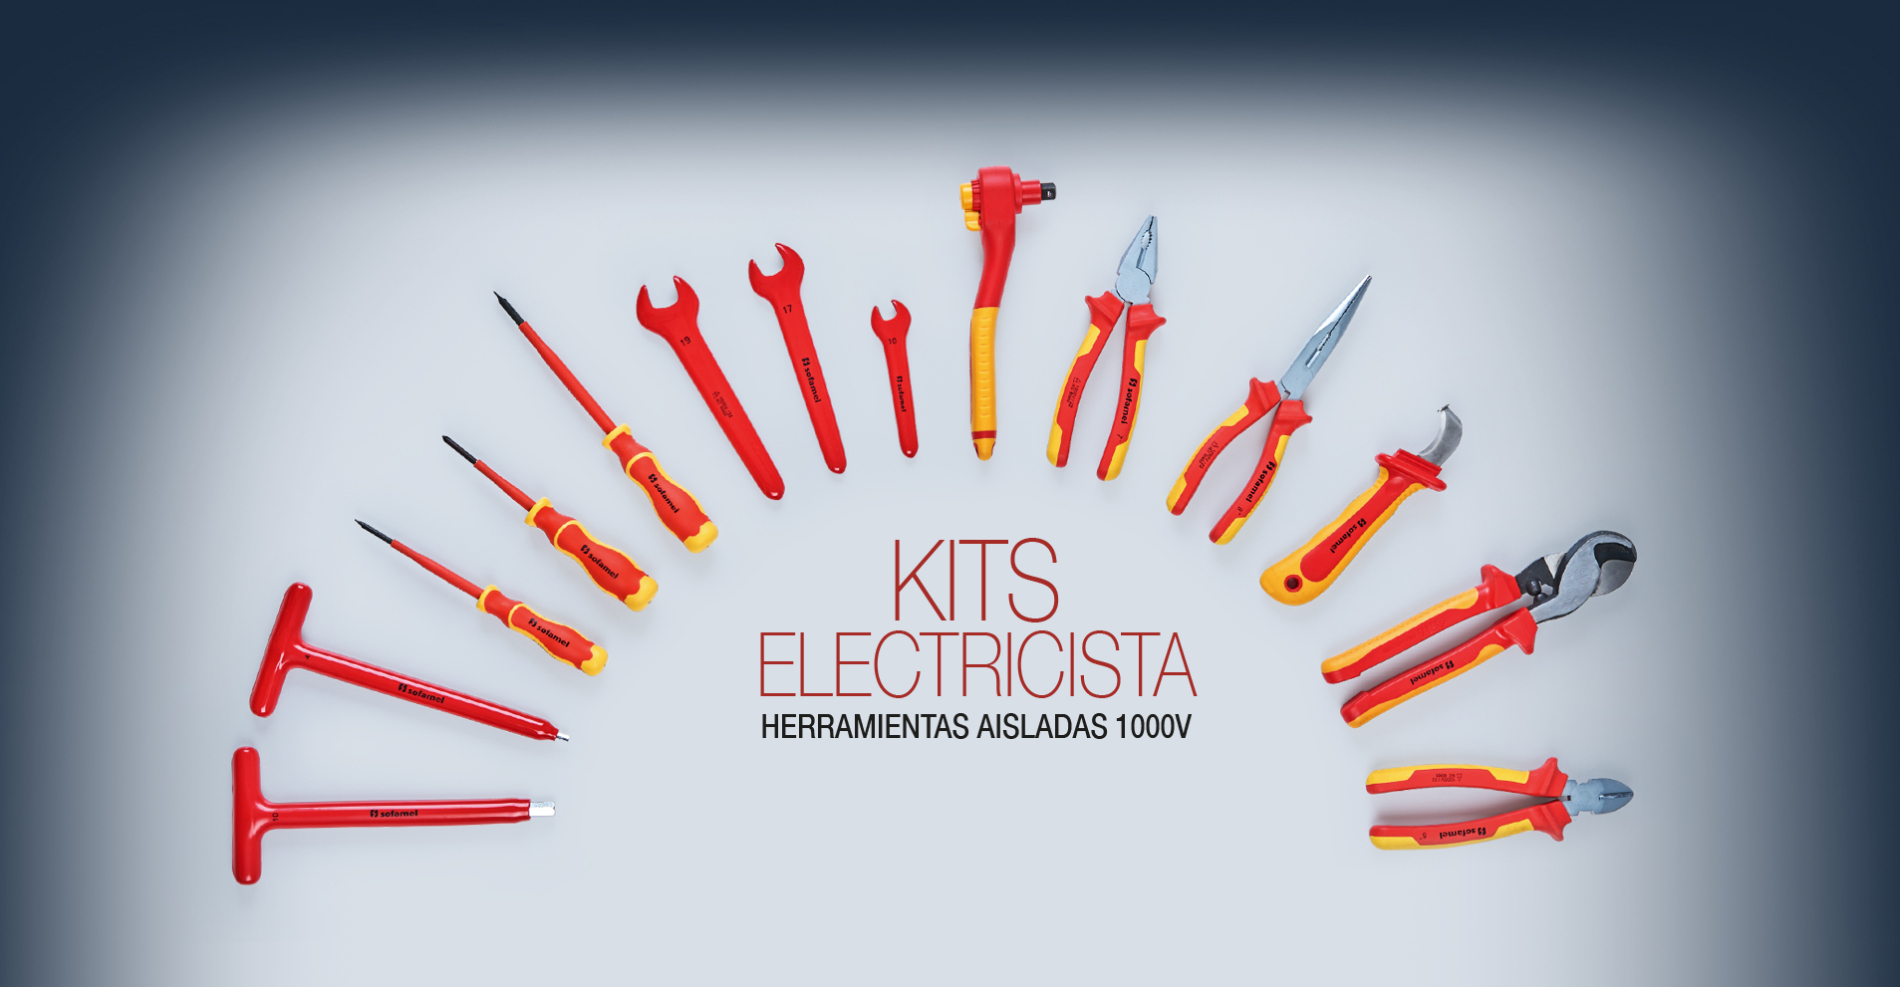 Kits electricista